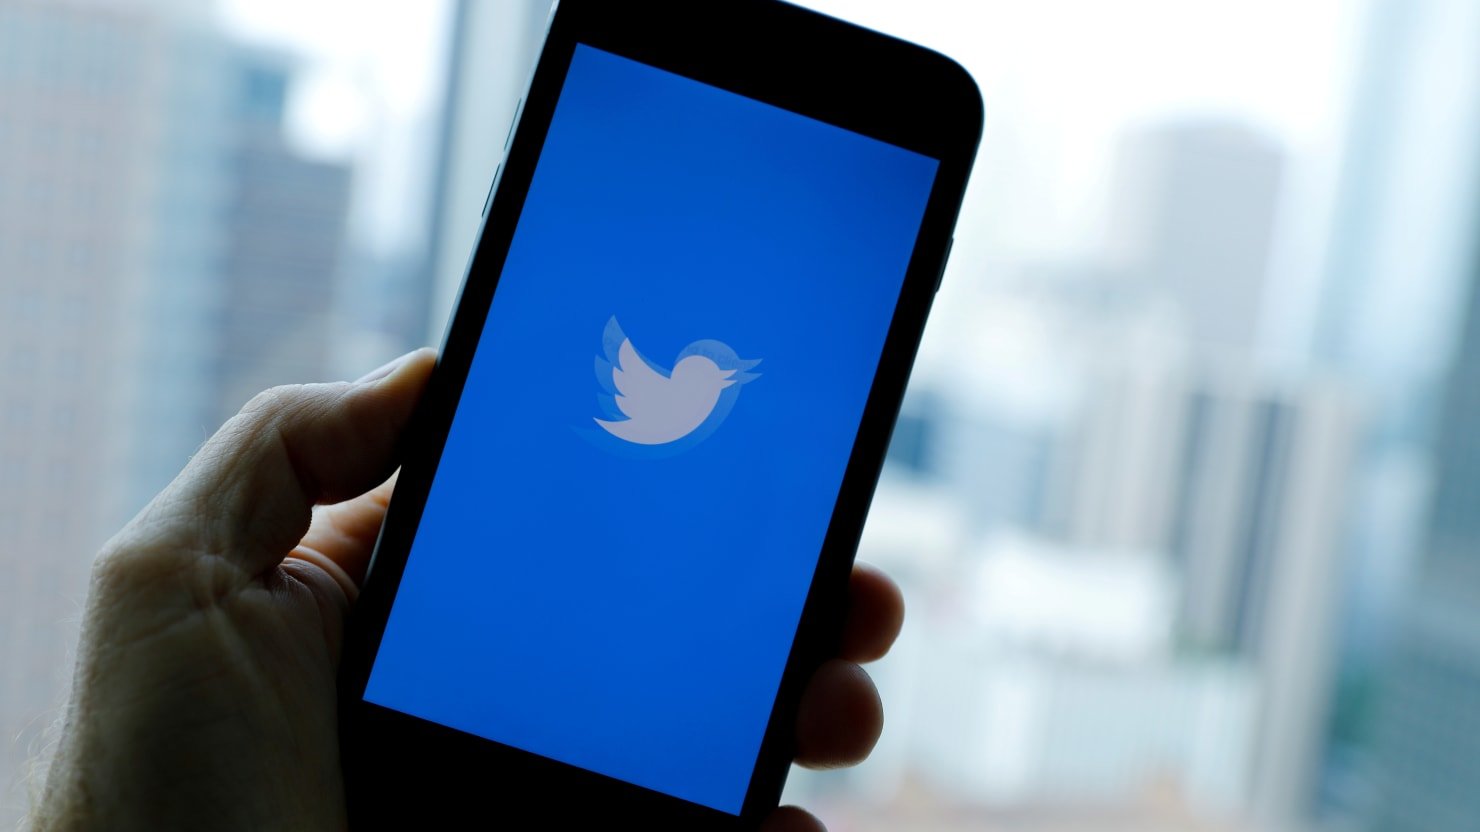 Twitter Says Investigating Global Platform Outage